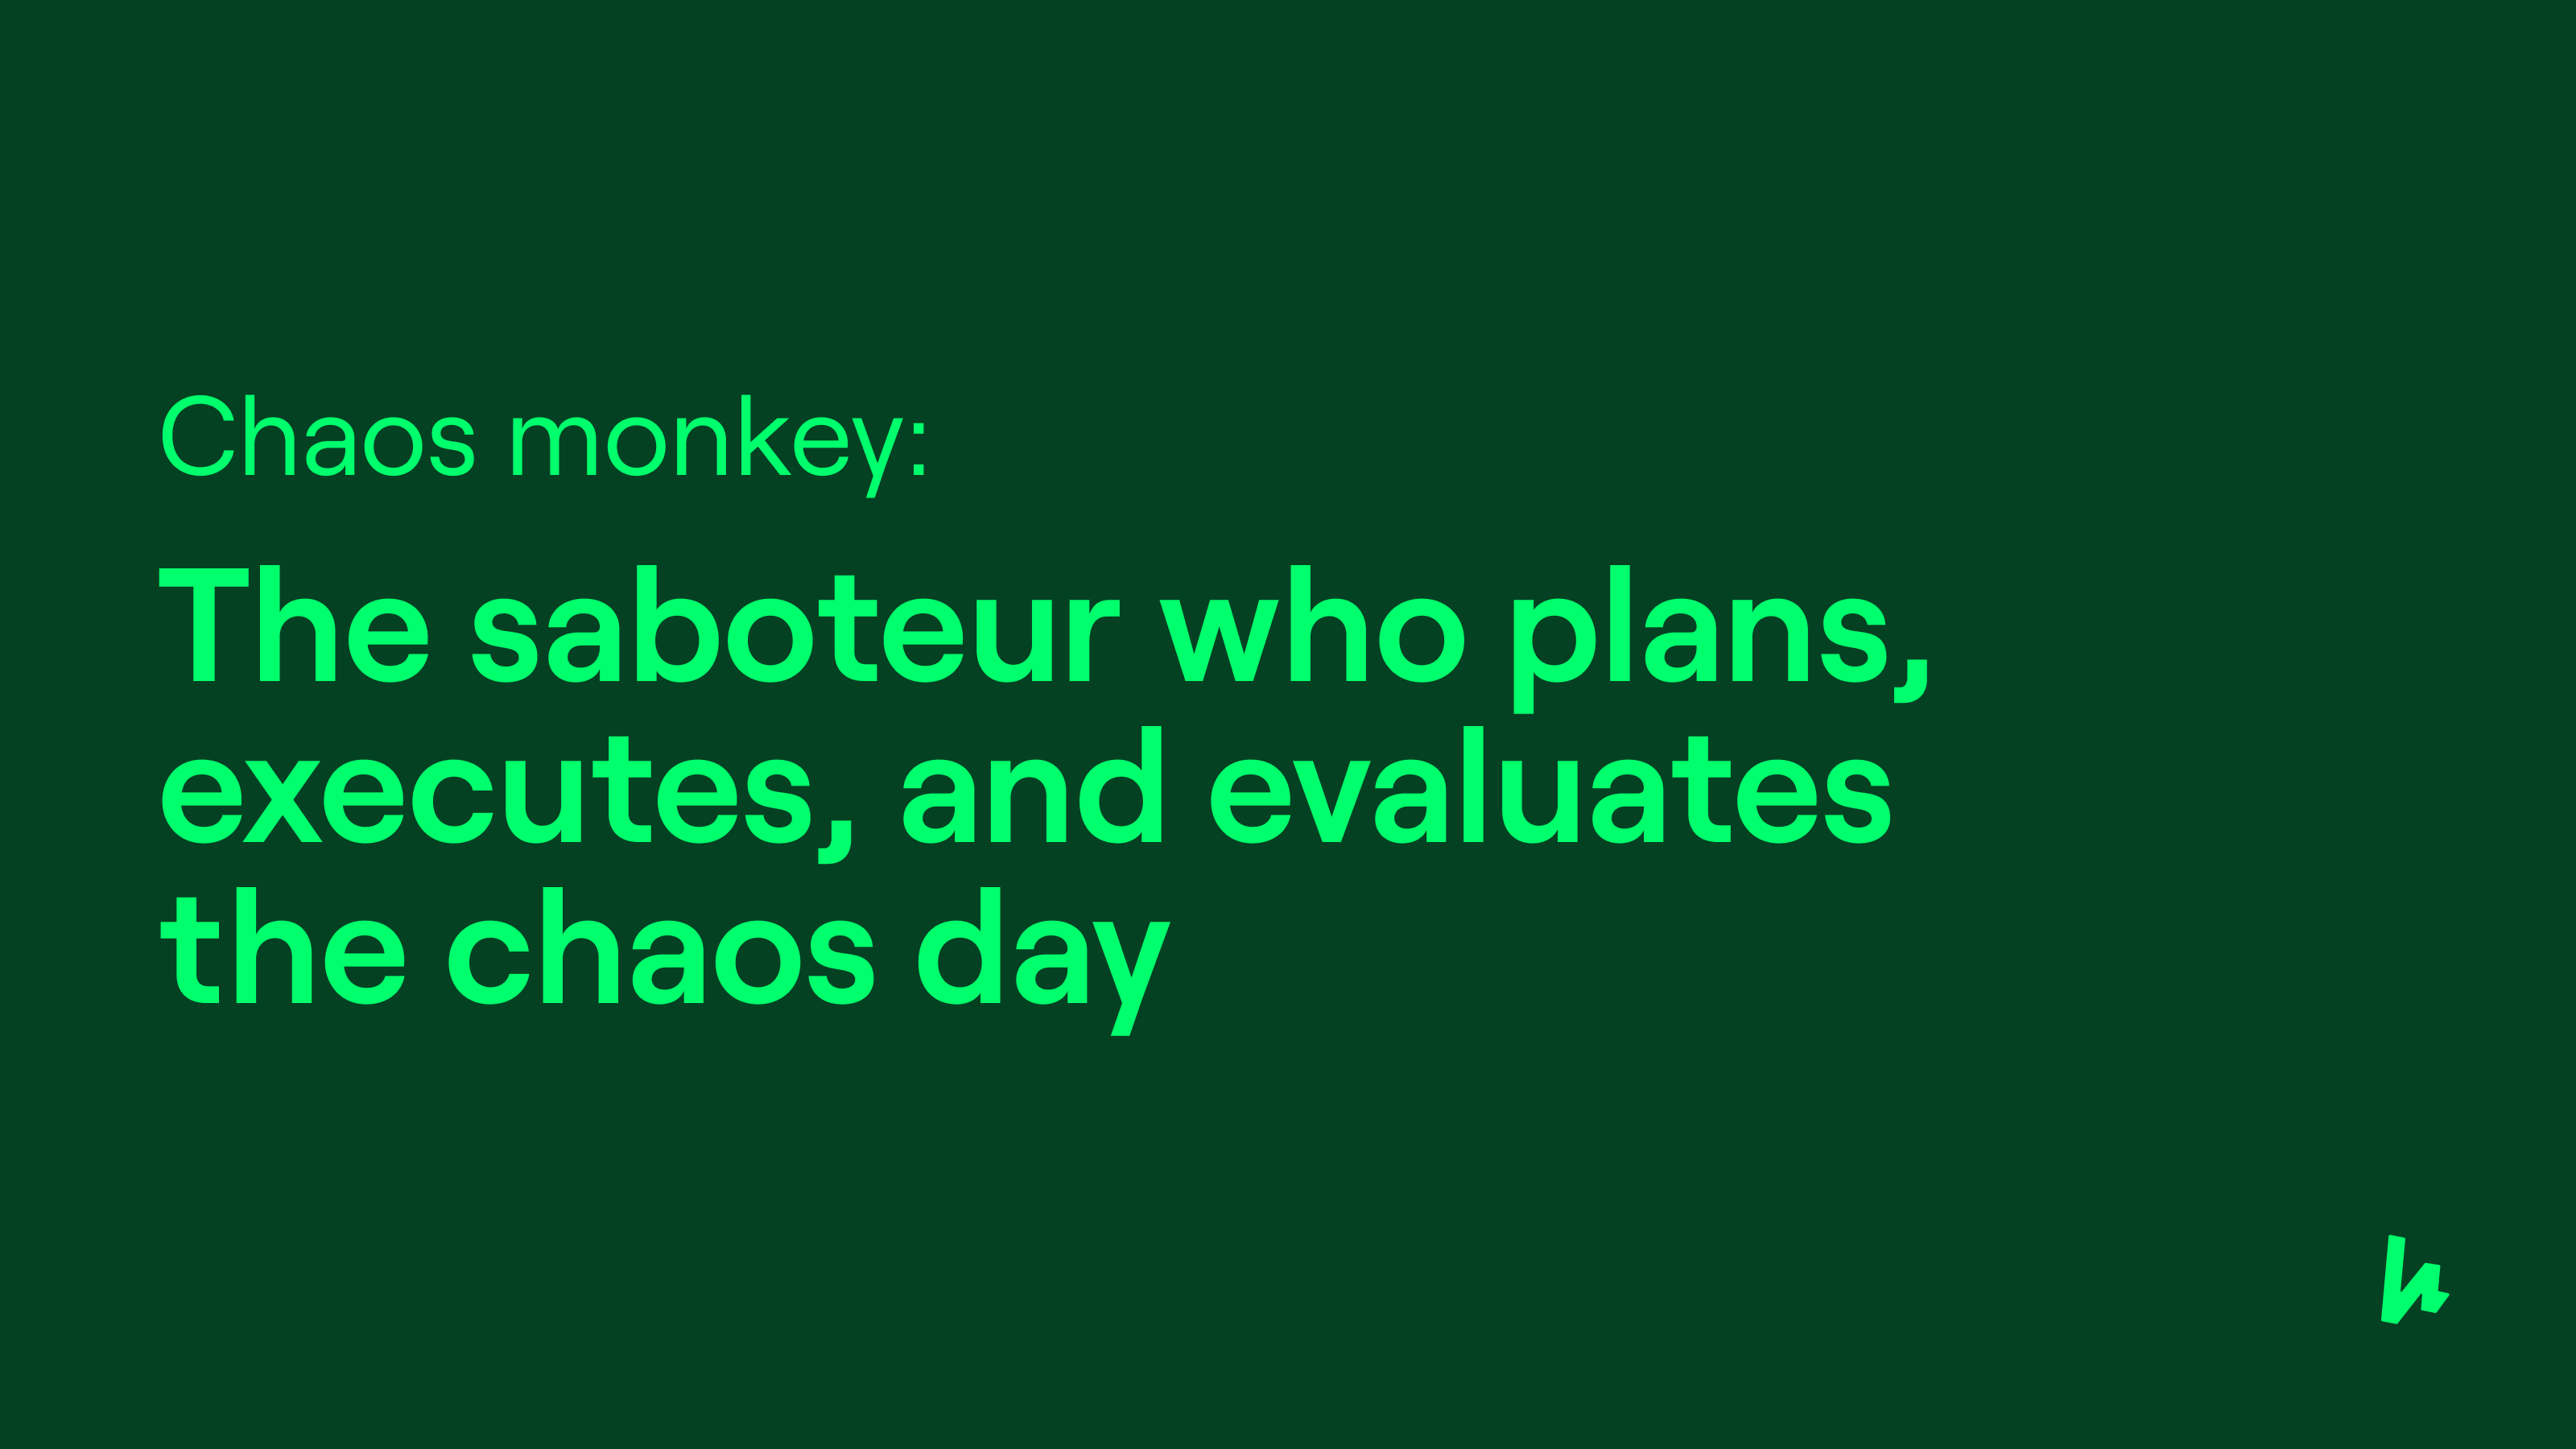 Chaos monkey definition